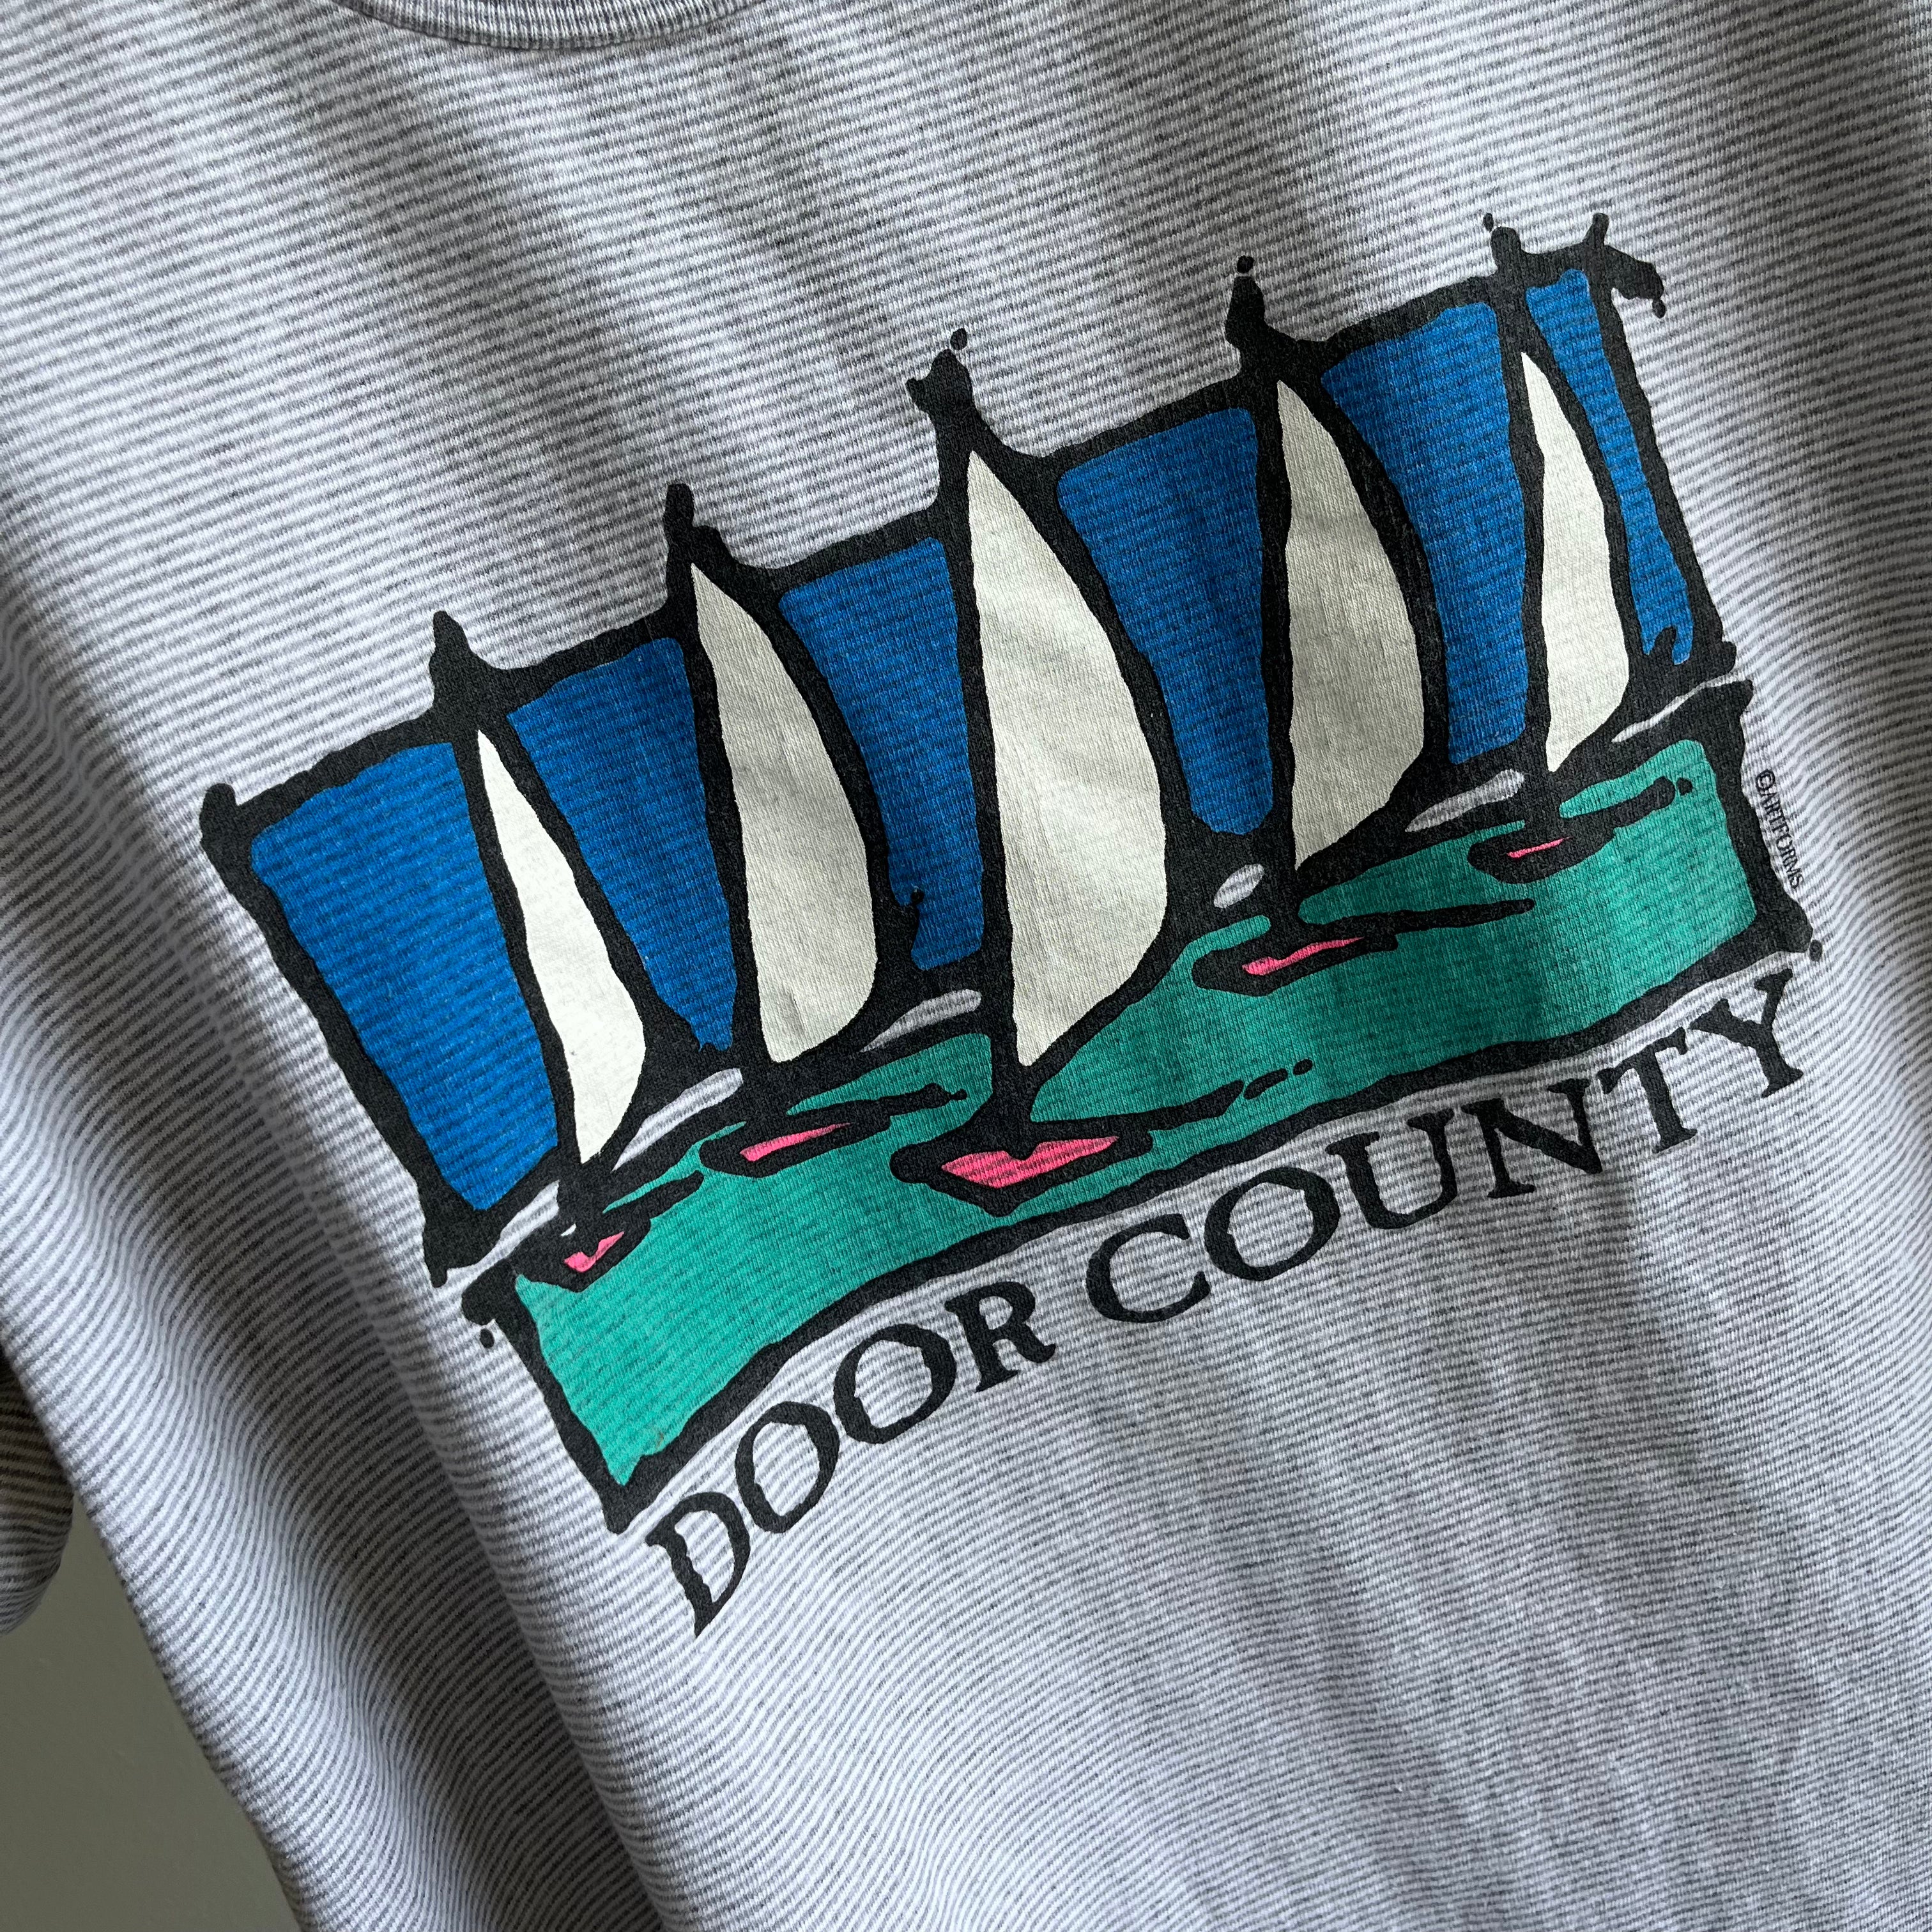 1990s Door County Pinstriped Cotton Tourist T-Shirt